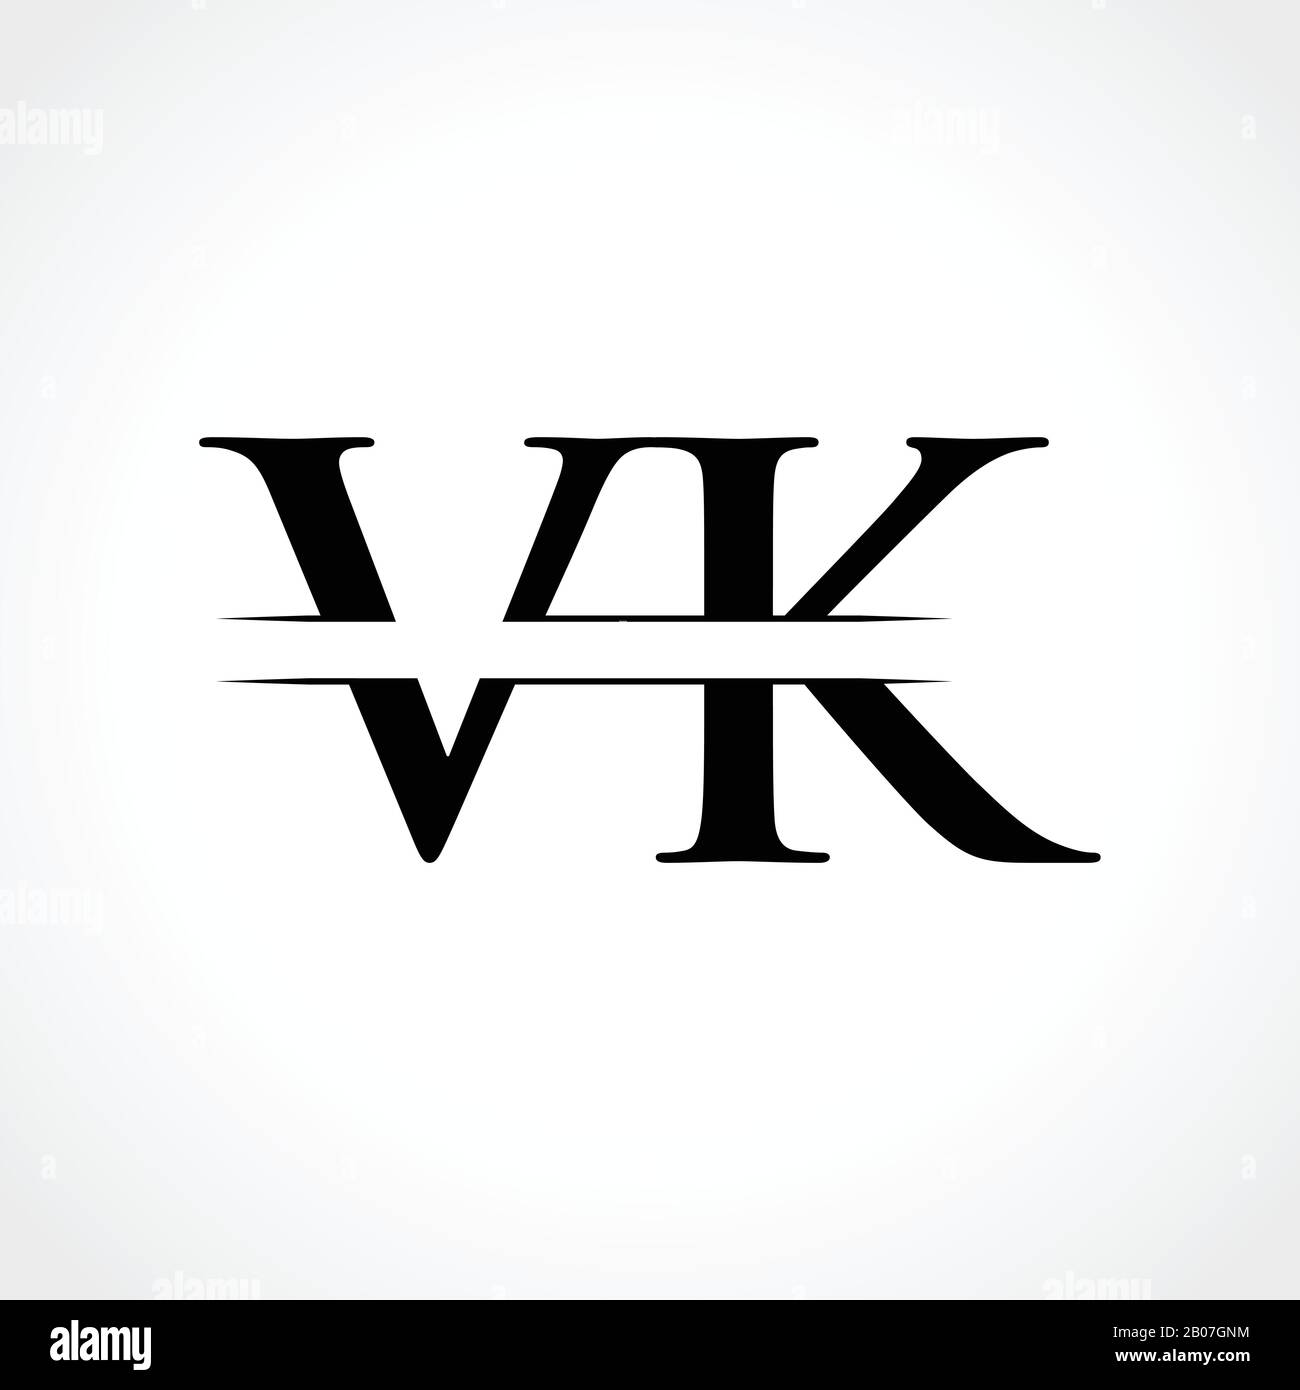 Vk Name Wallpaper